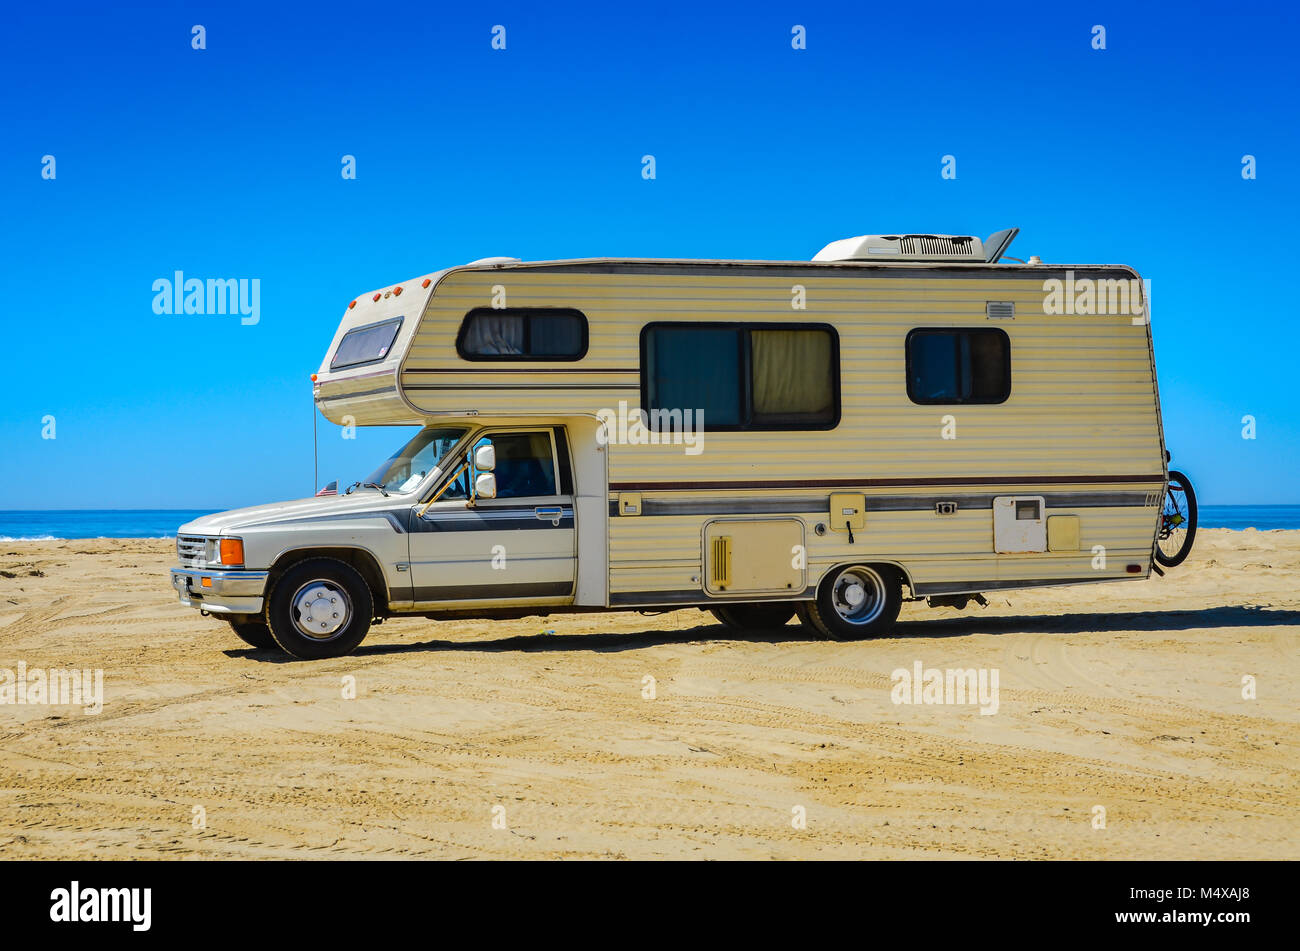 Camper van recreational vehicle on the beach shore at the Oceano Dunes in San Luis Obispo, CA. Stock Photo